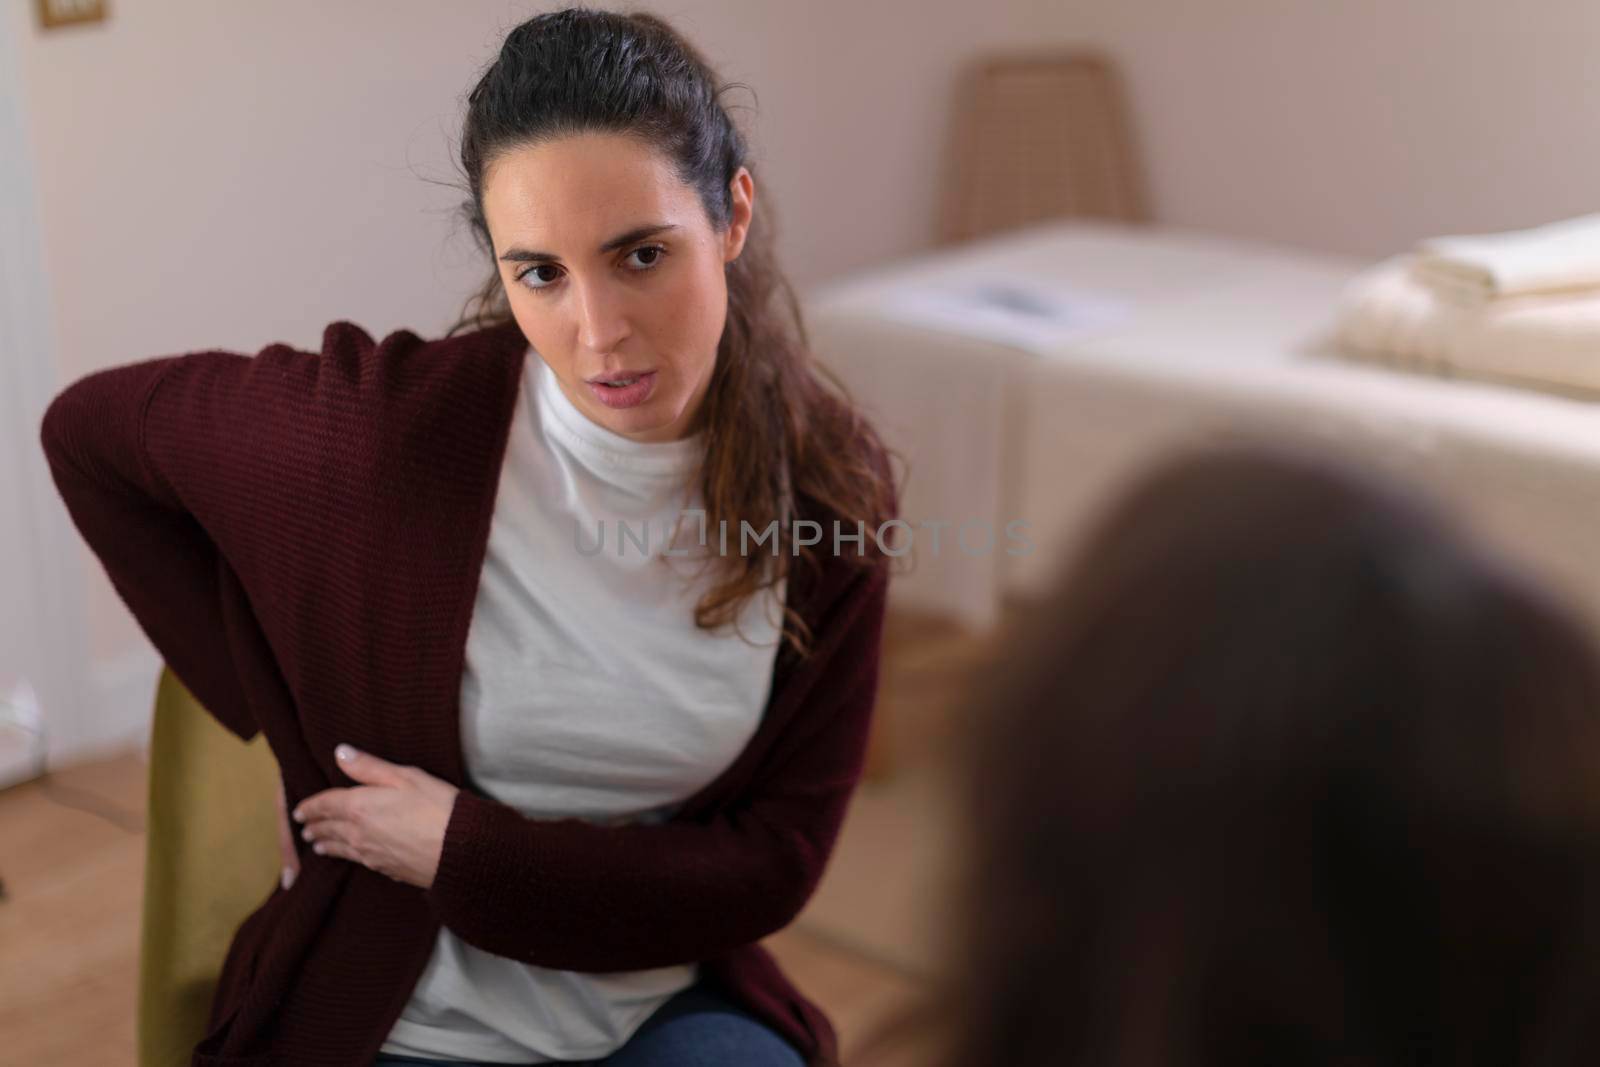 A female patient talks to her therapist by stockrojoverdeyazul